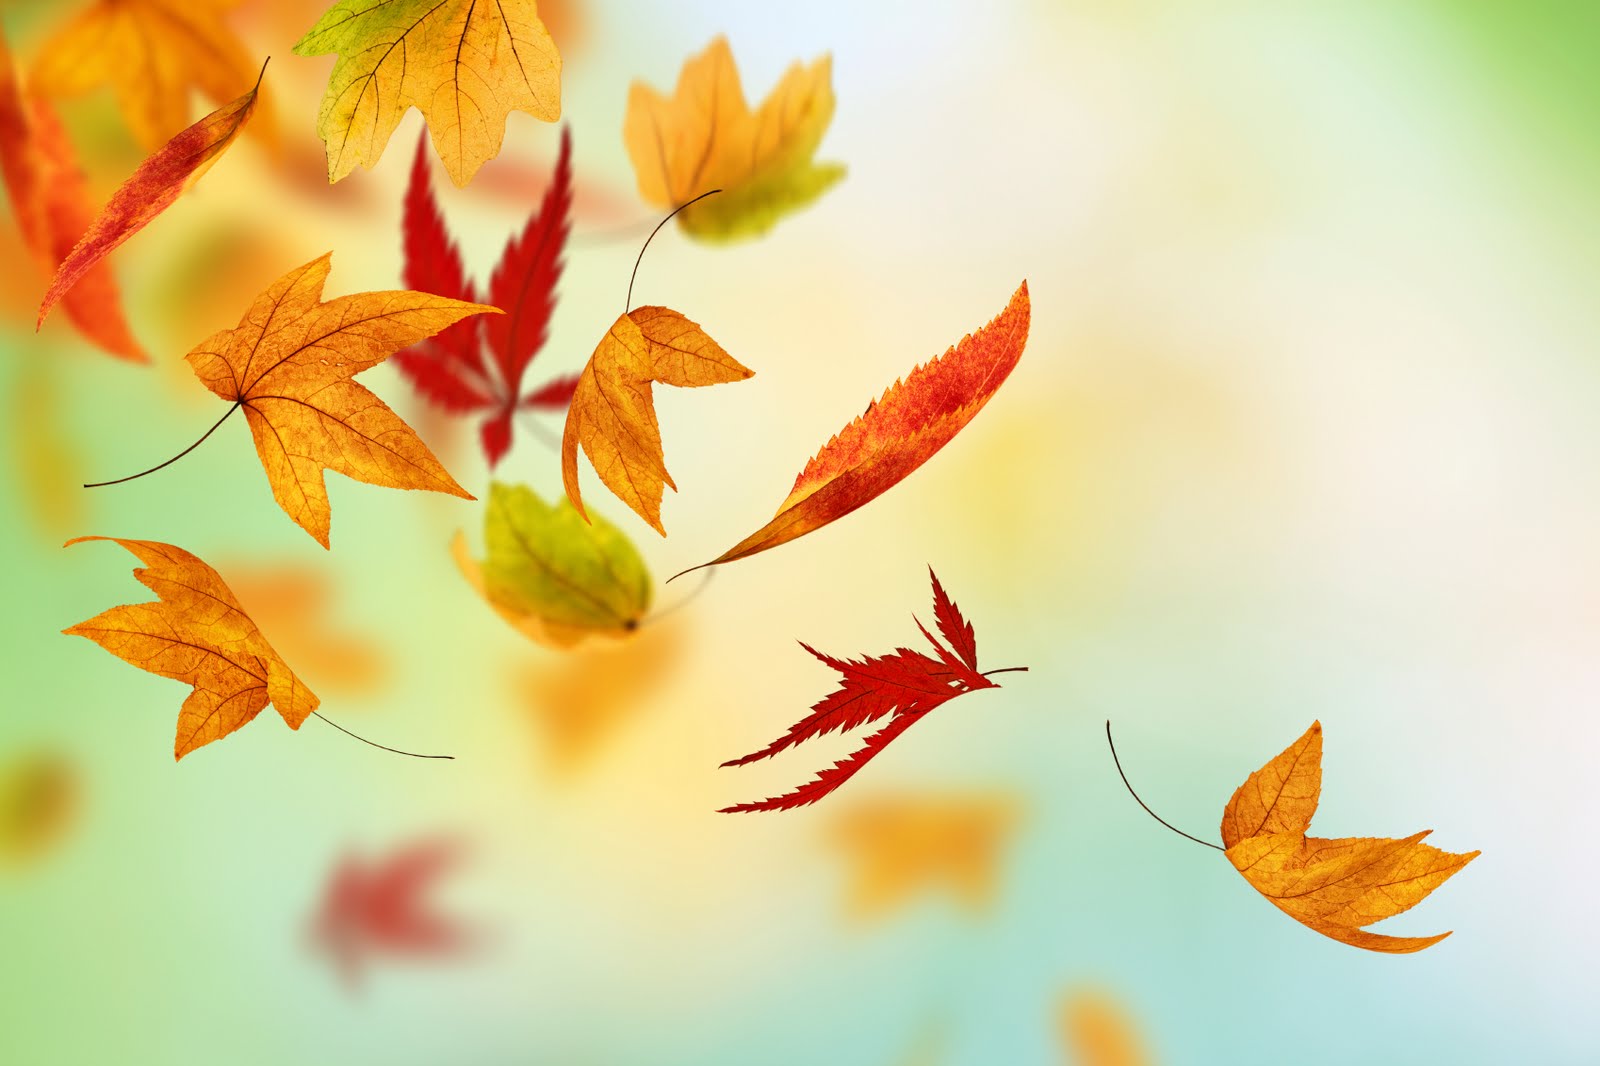 2014-09-11-fall-for-feedback-Autumn-Fall-Leaves-HD-Wallpaper.jpg